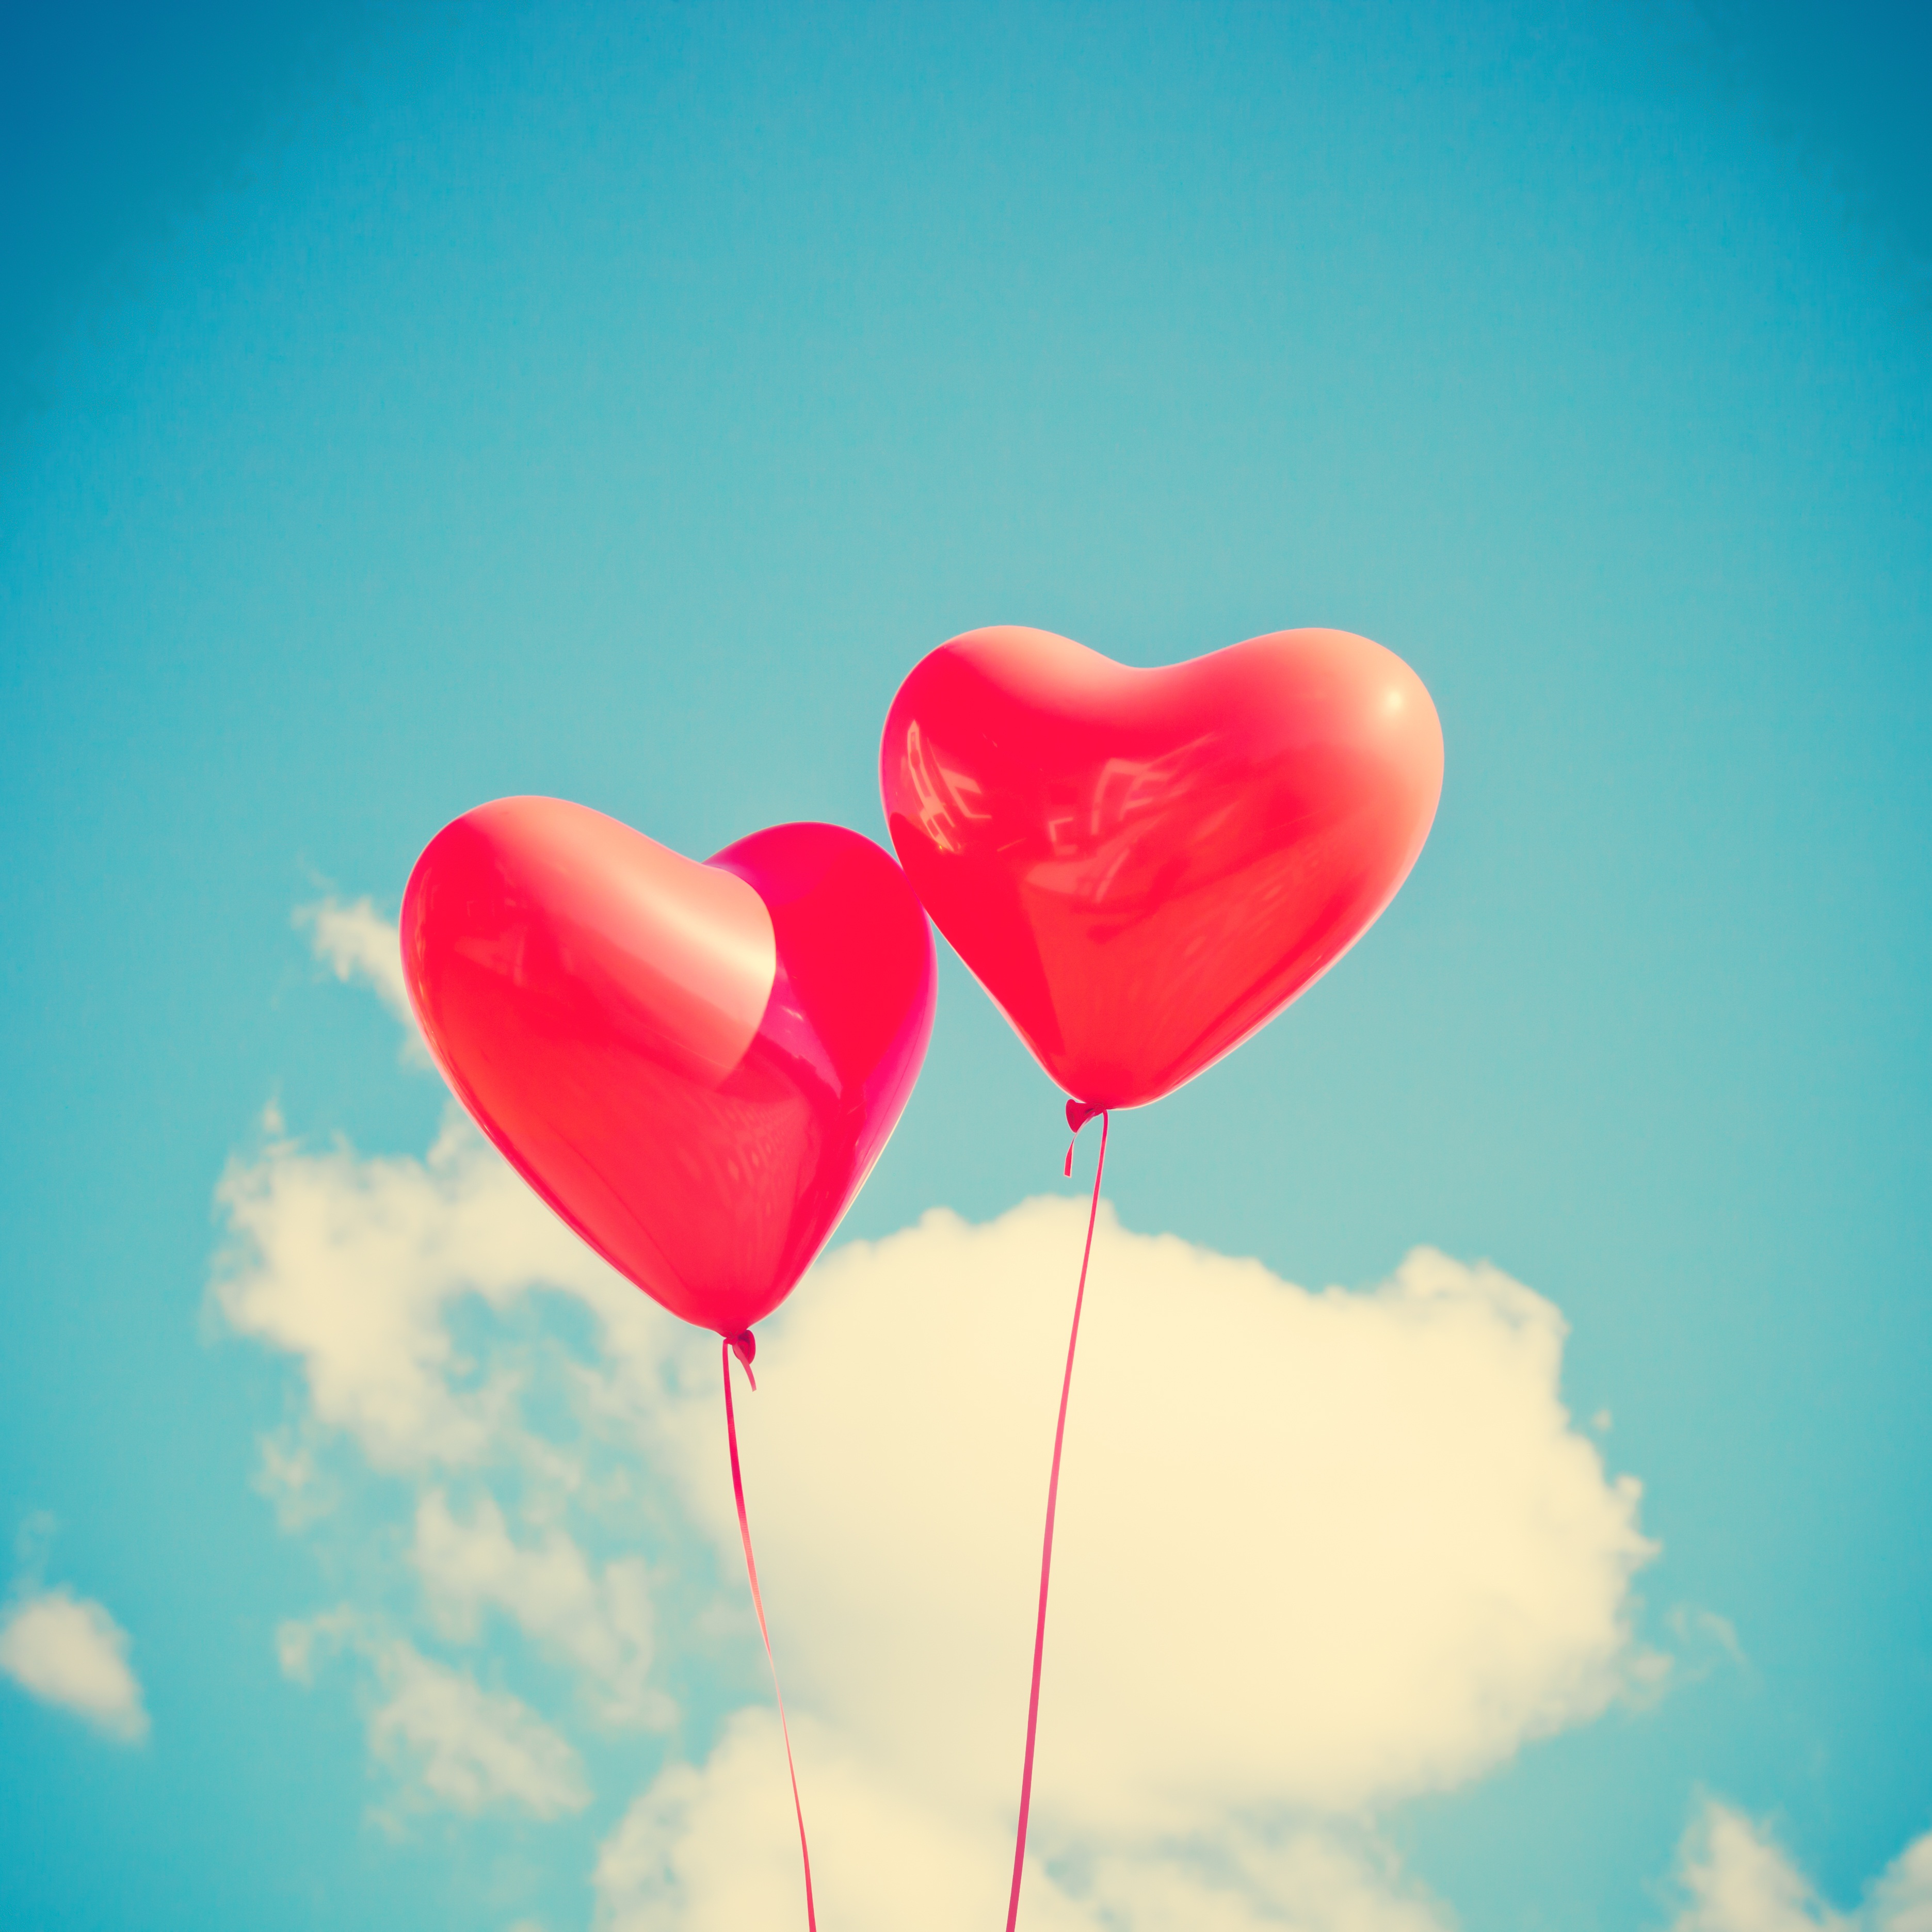 heart, love, balloons, sky, ease